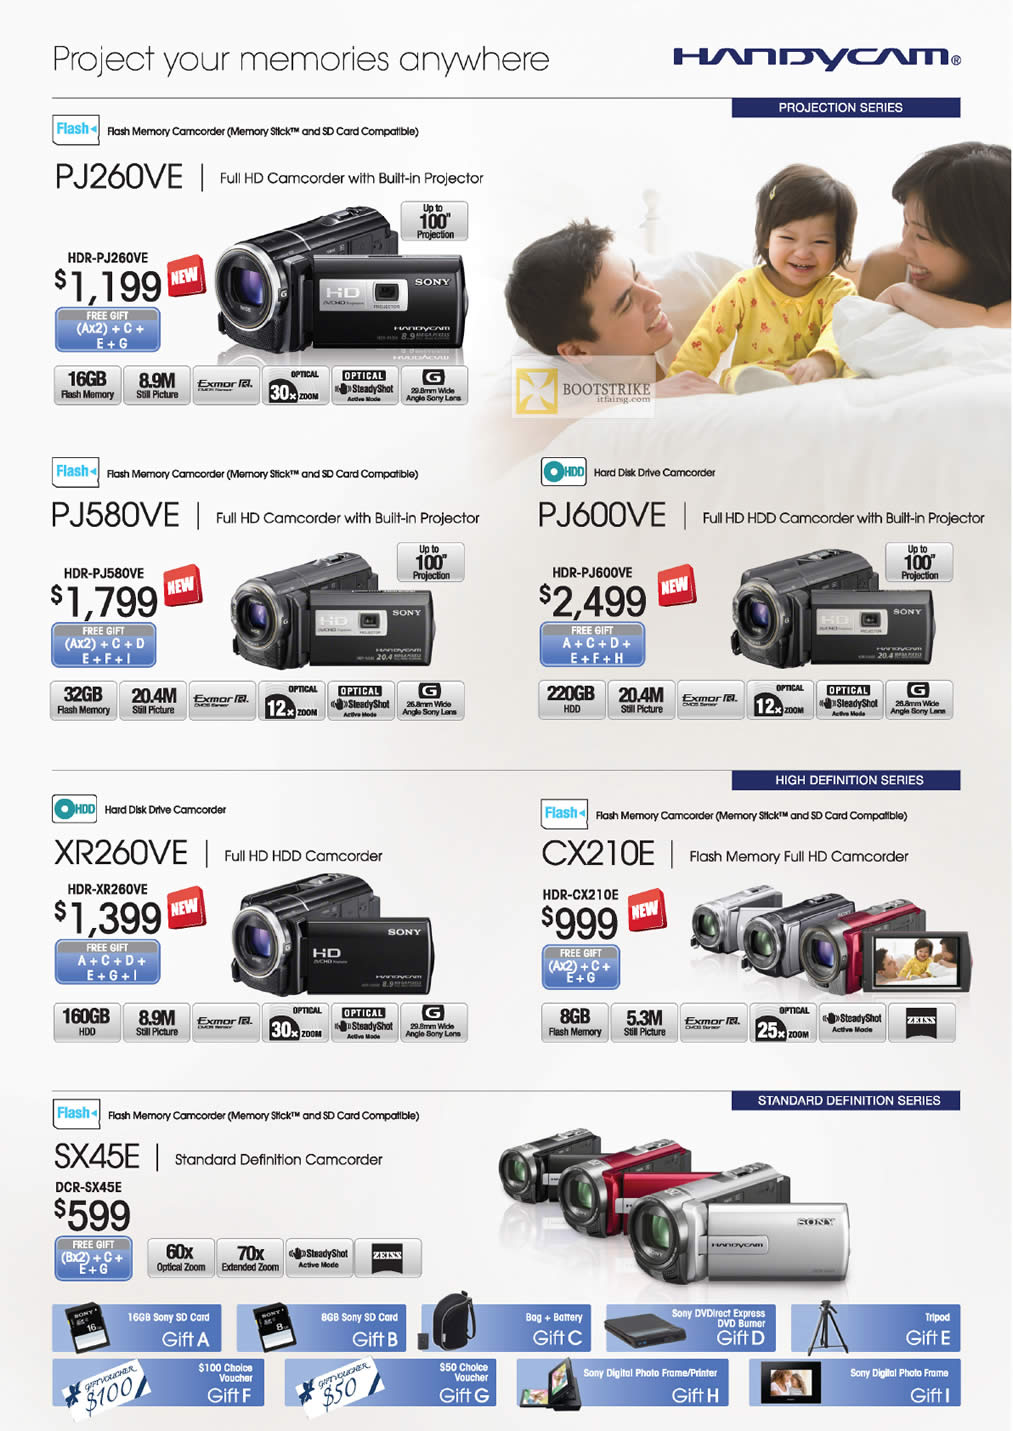 IT SHOW 2012 price list image brochure of Sony Video Camcorders Handycam HDR-PJ260VE, HDR-PJ580VE, HDR-PJ600VE, HDR-XR260VE, HDR-CX210E, DCR-SX45E